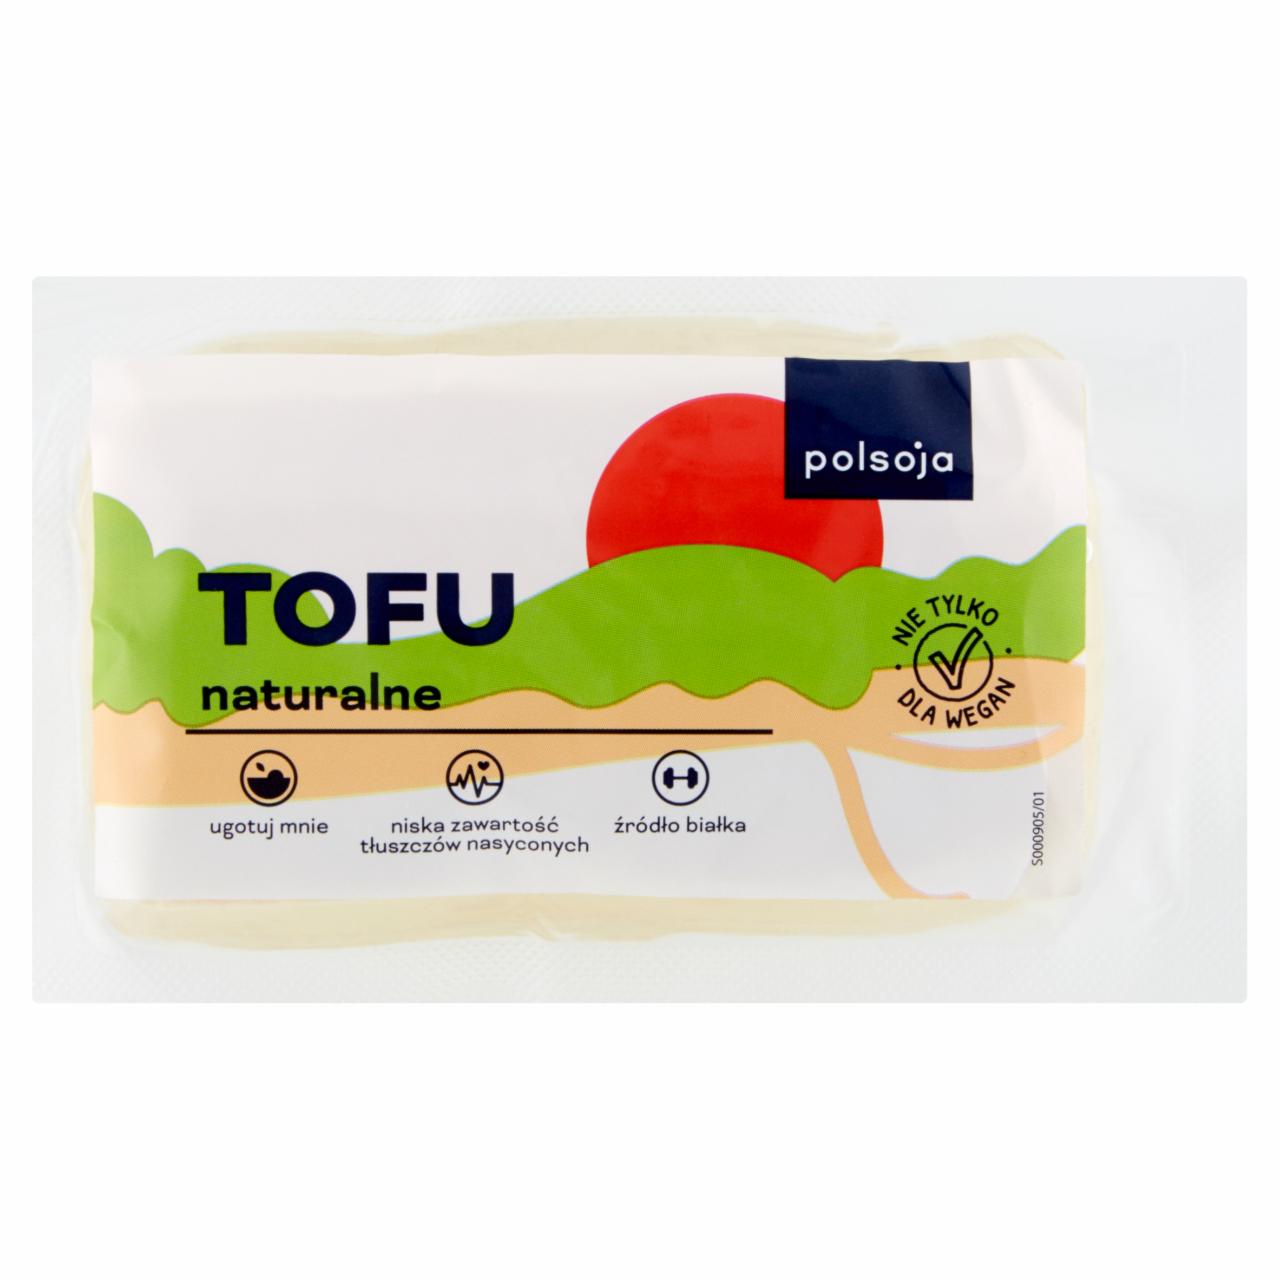 Zdjęcia - Polsoja Tofu naturalne 200 g